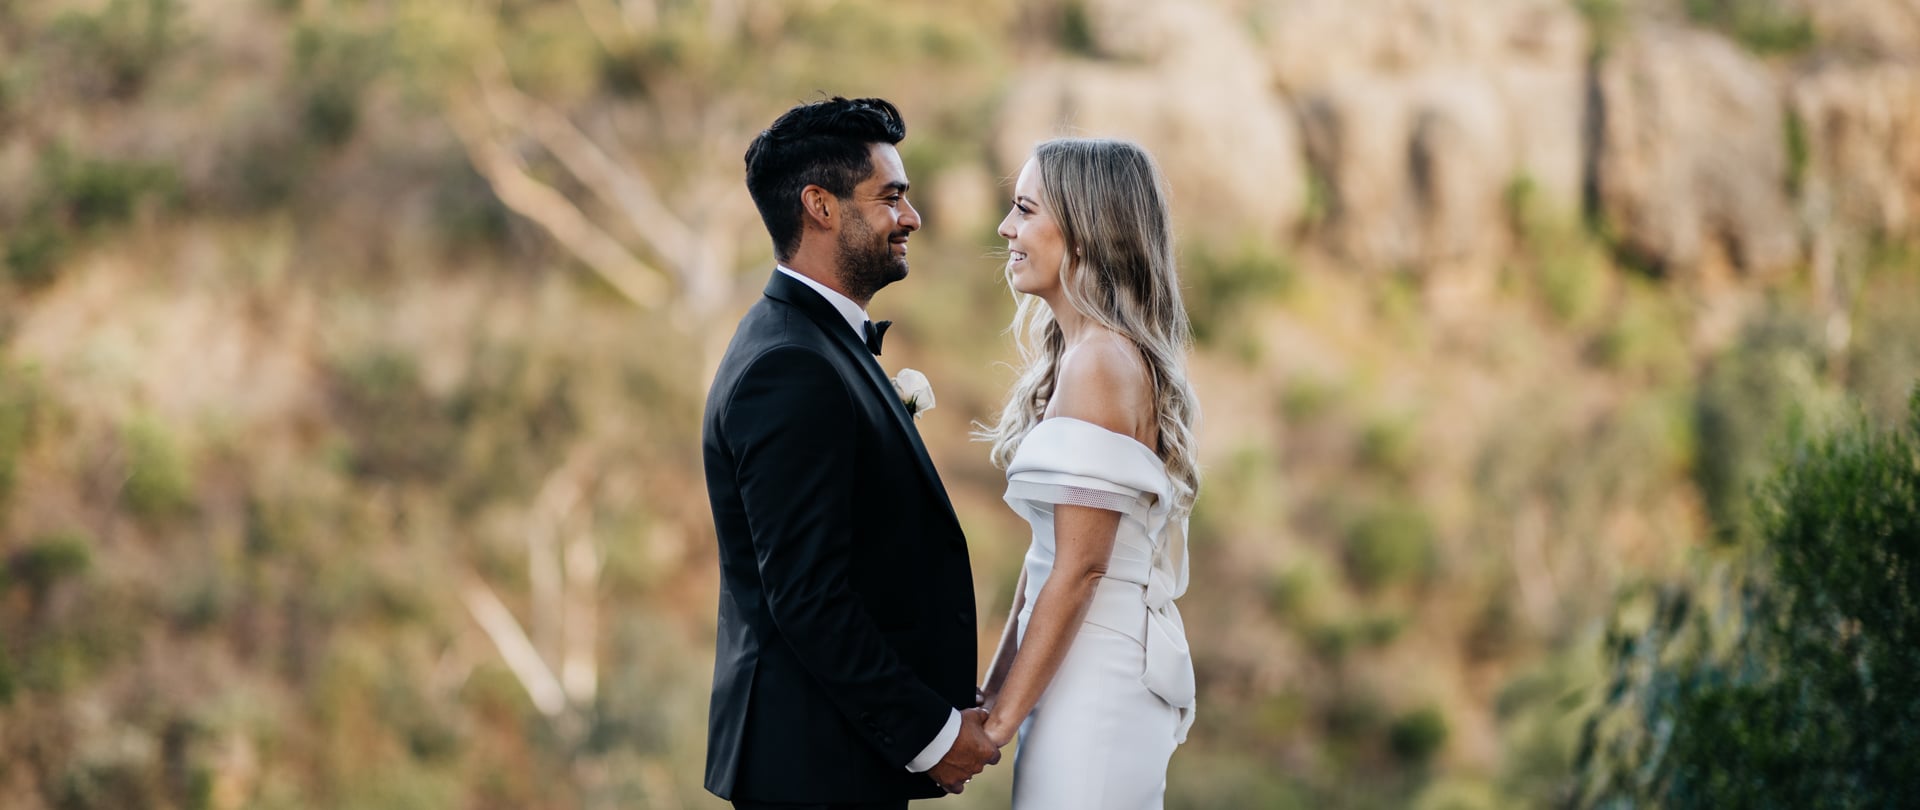 Biagio & Hannah Wedding Video Filmed at Geelong, Victoria